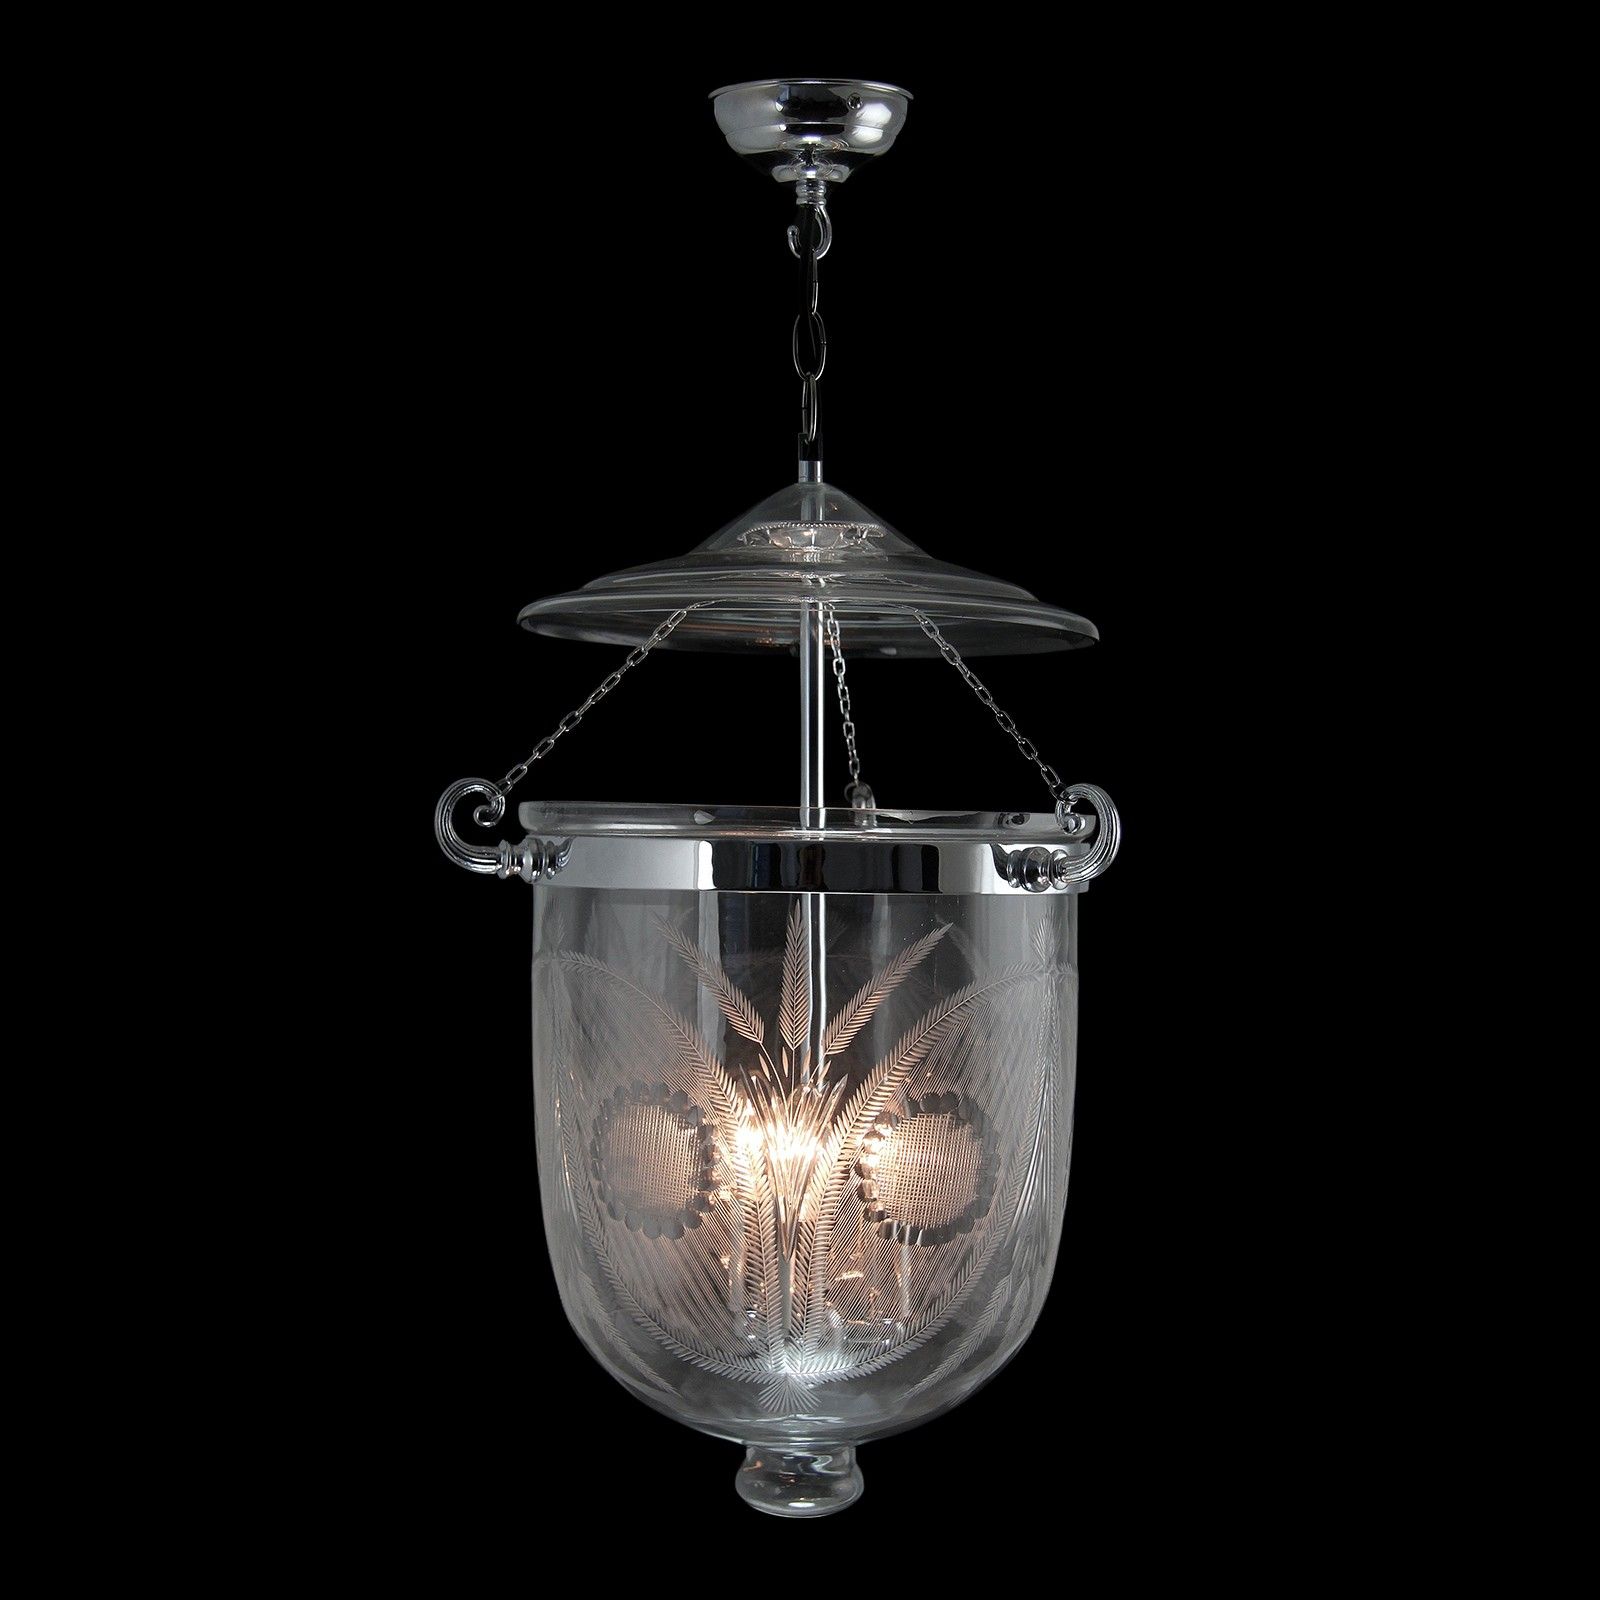 Fern Lantern  - Victorian Style Light - Large in Chrome